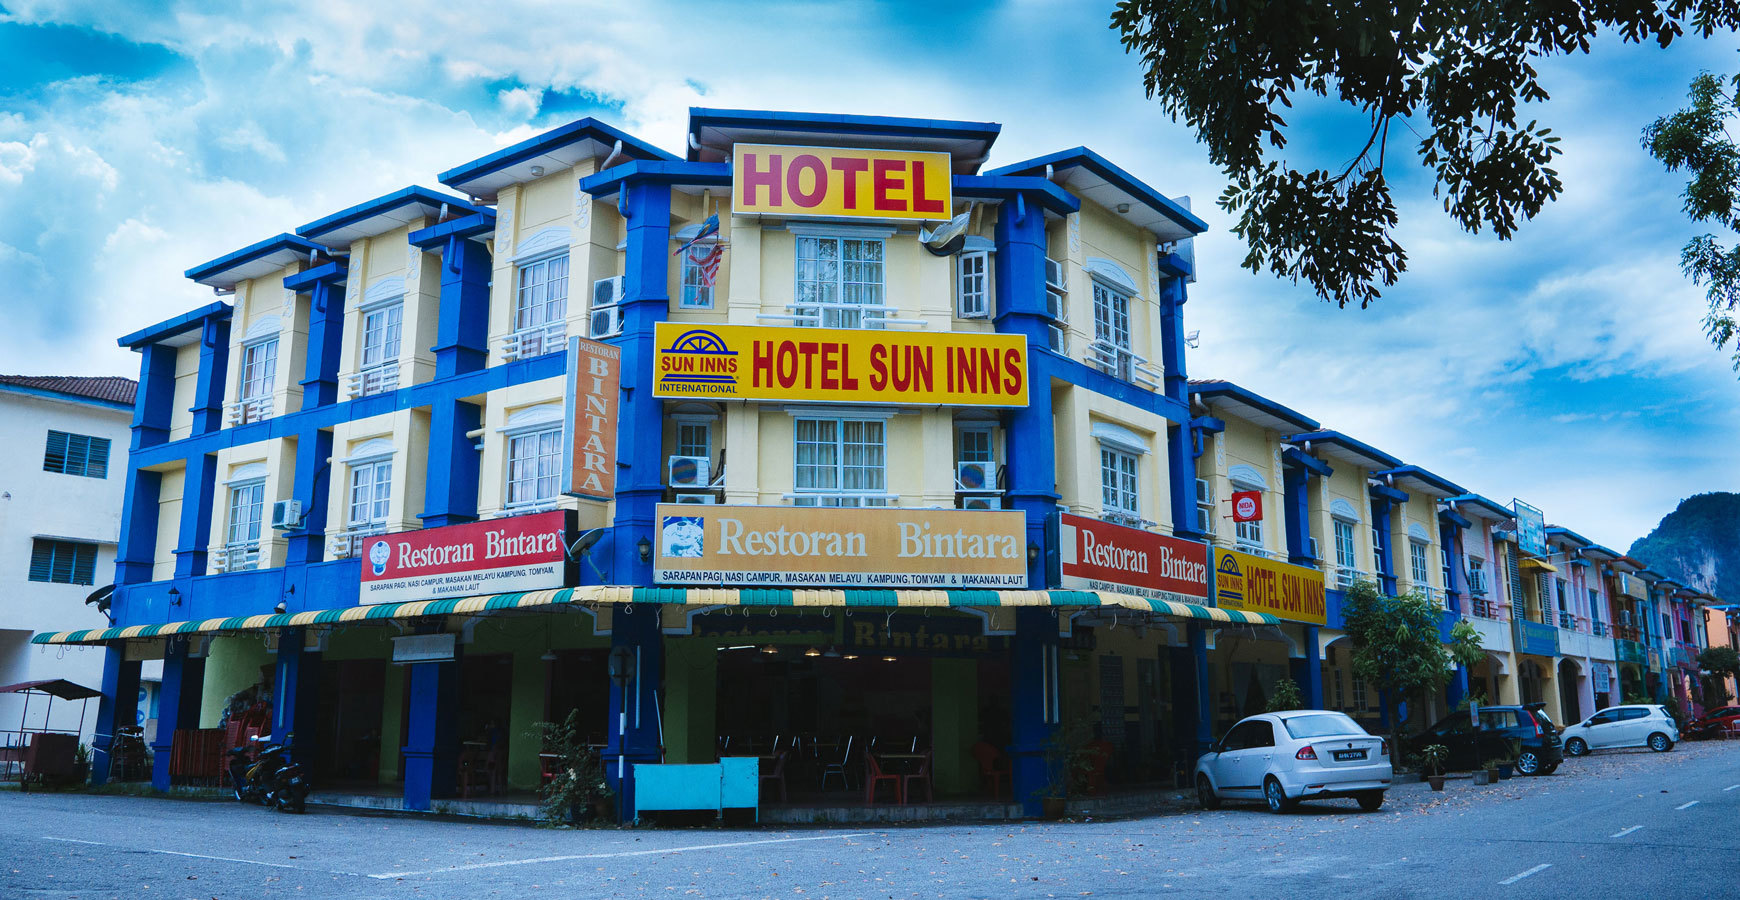 Hotel di Ipoh Perak - Murah dan Selesa © LetsGoHoliday.my